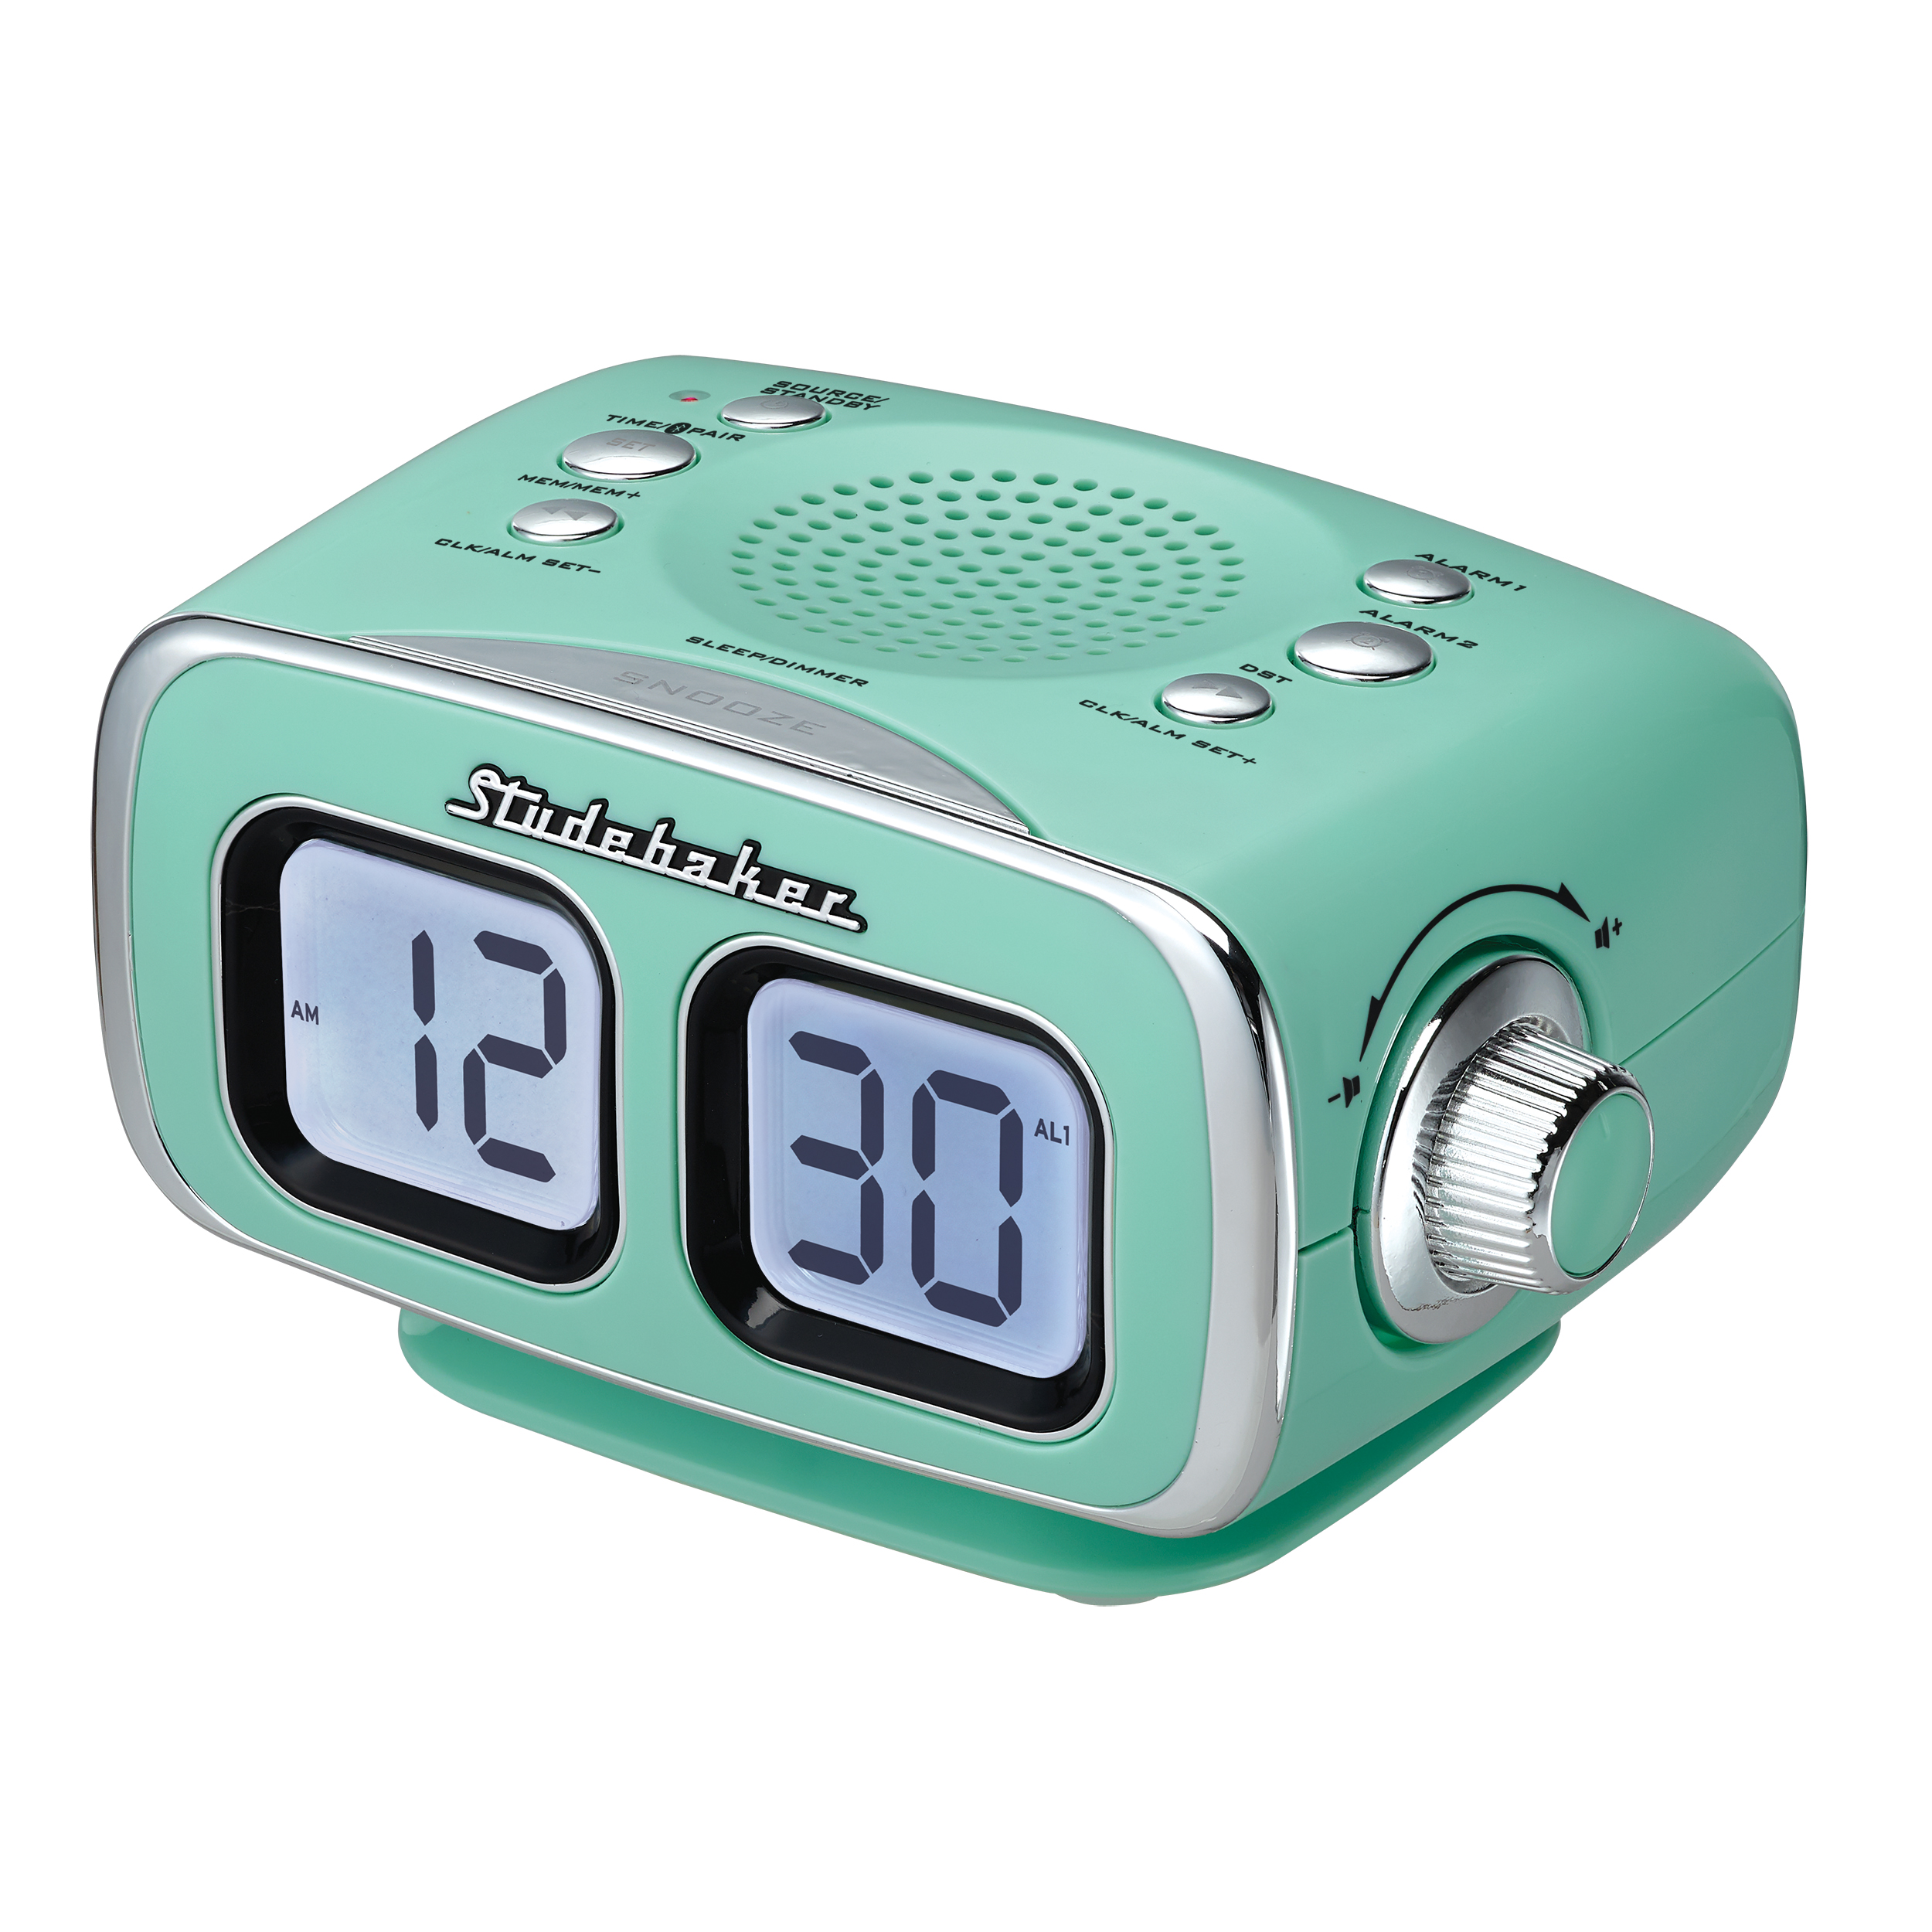 Studebaker - Digital AM/FM Clock Radio - Green